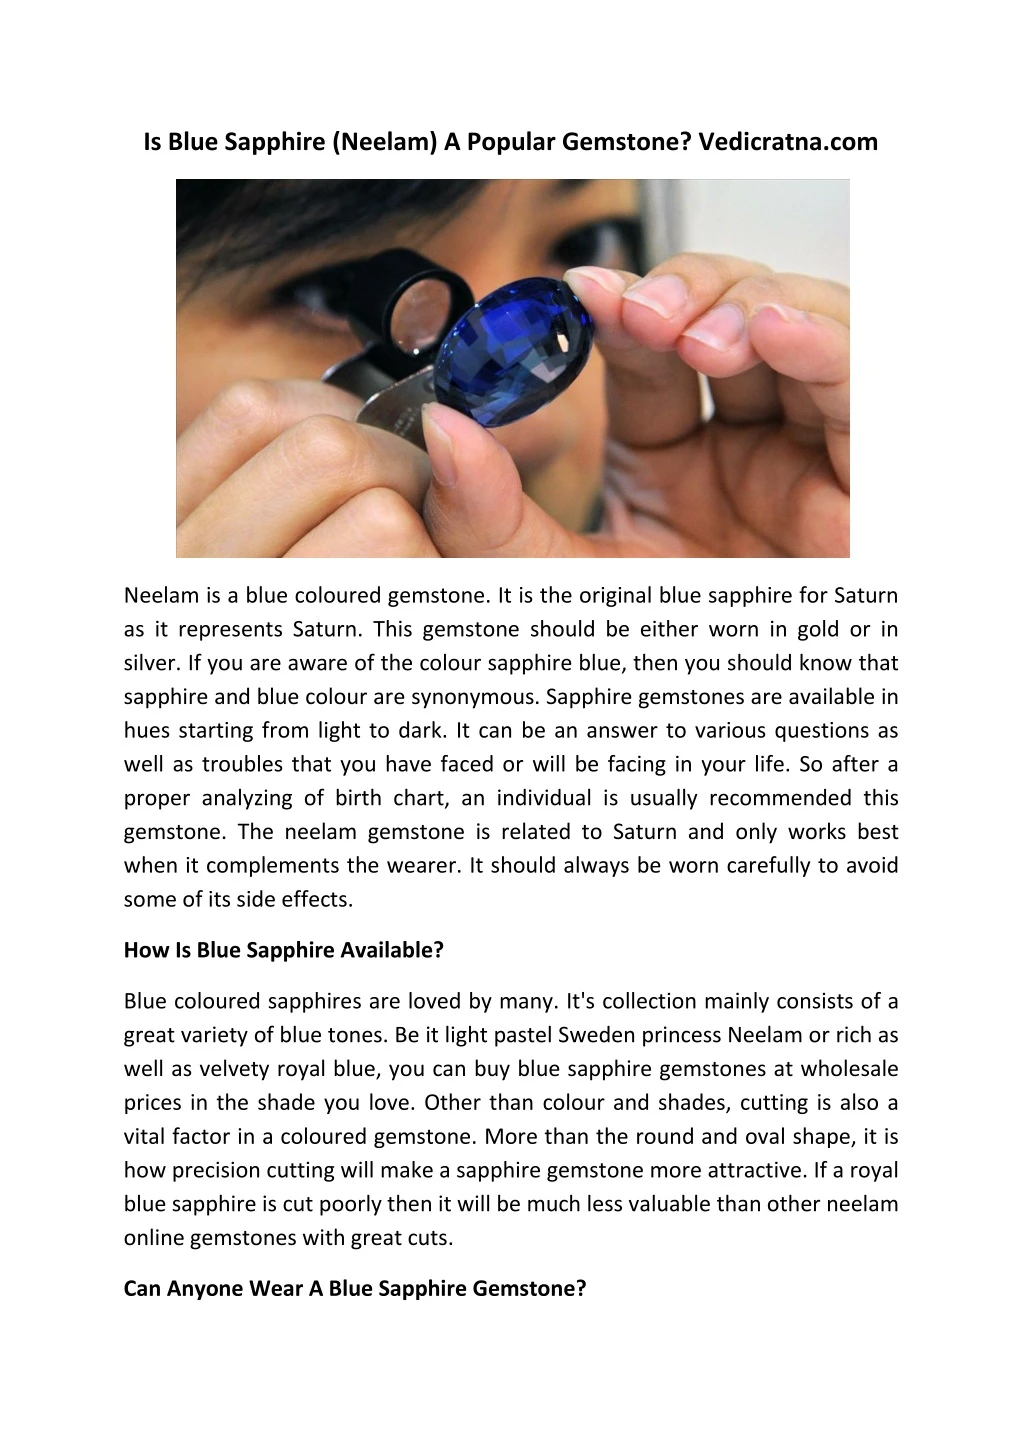 is blue sapphire neelam a popular gemstone